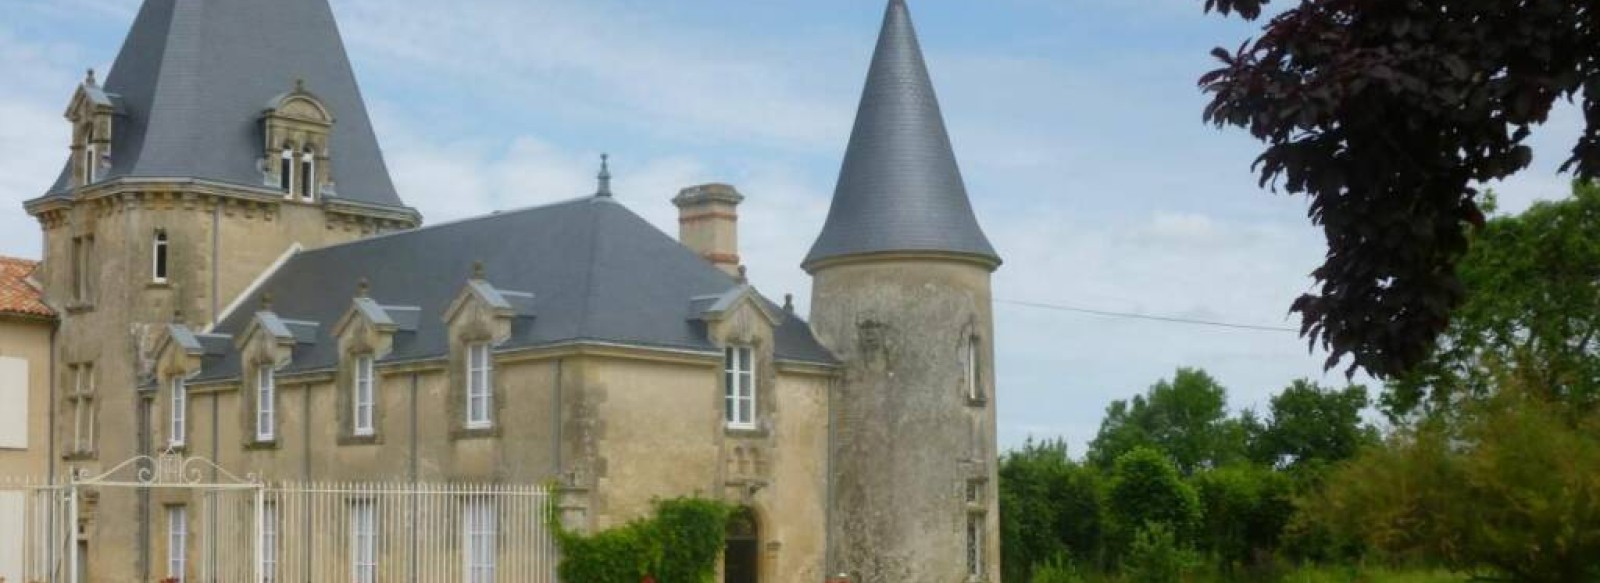 Chateau de Serigny